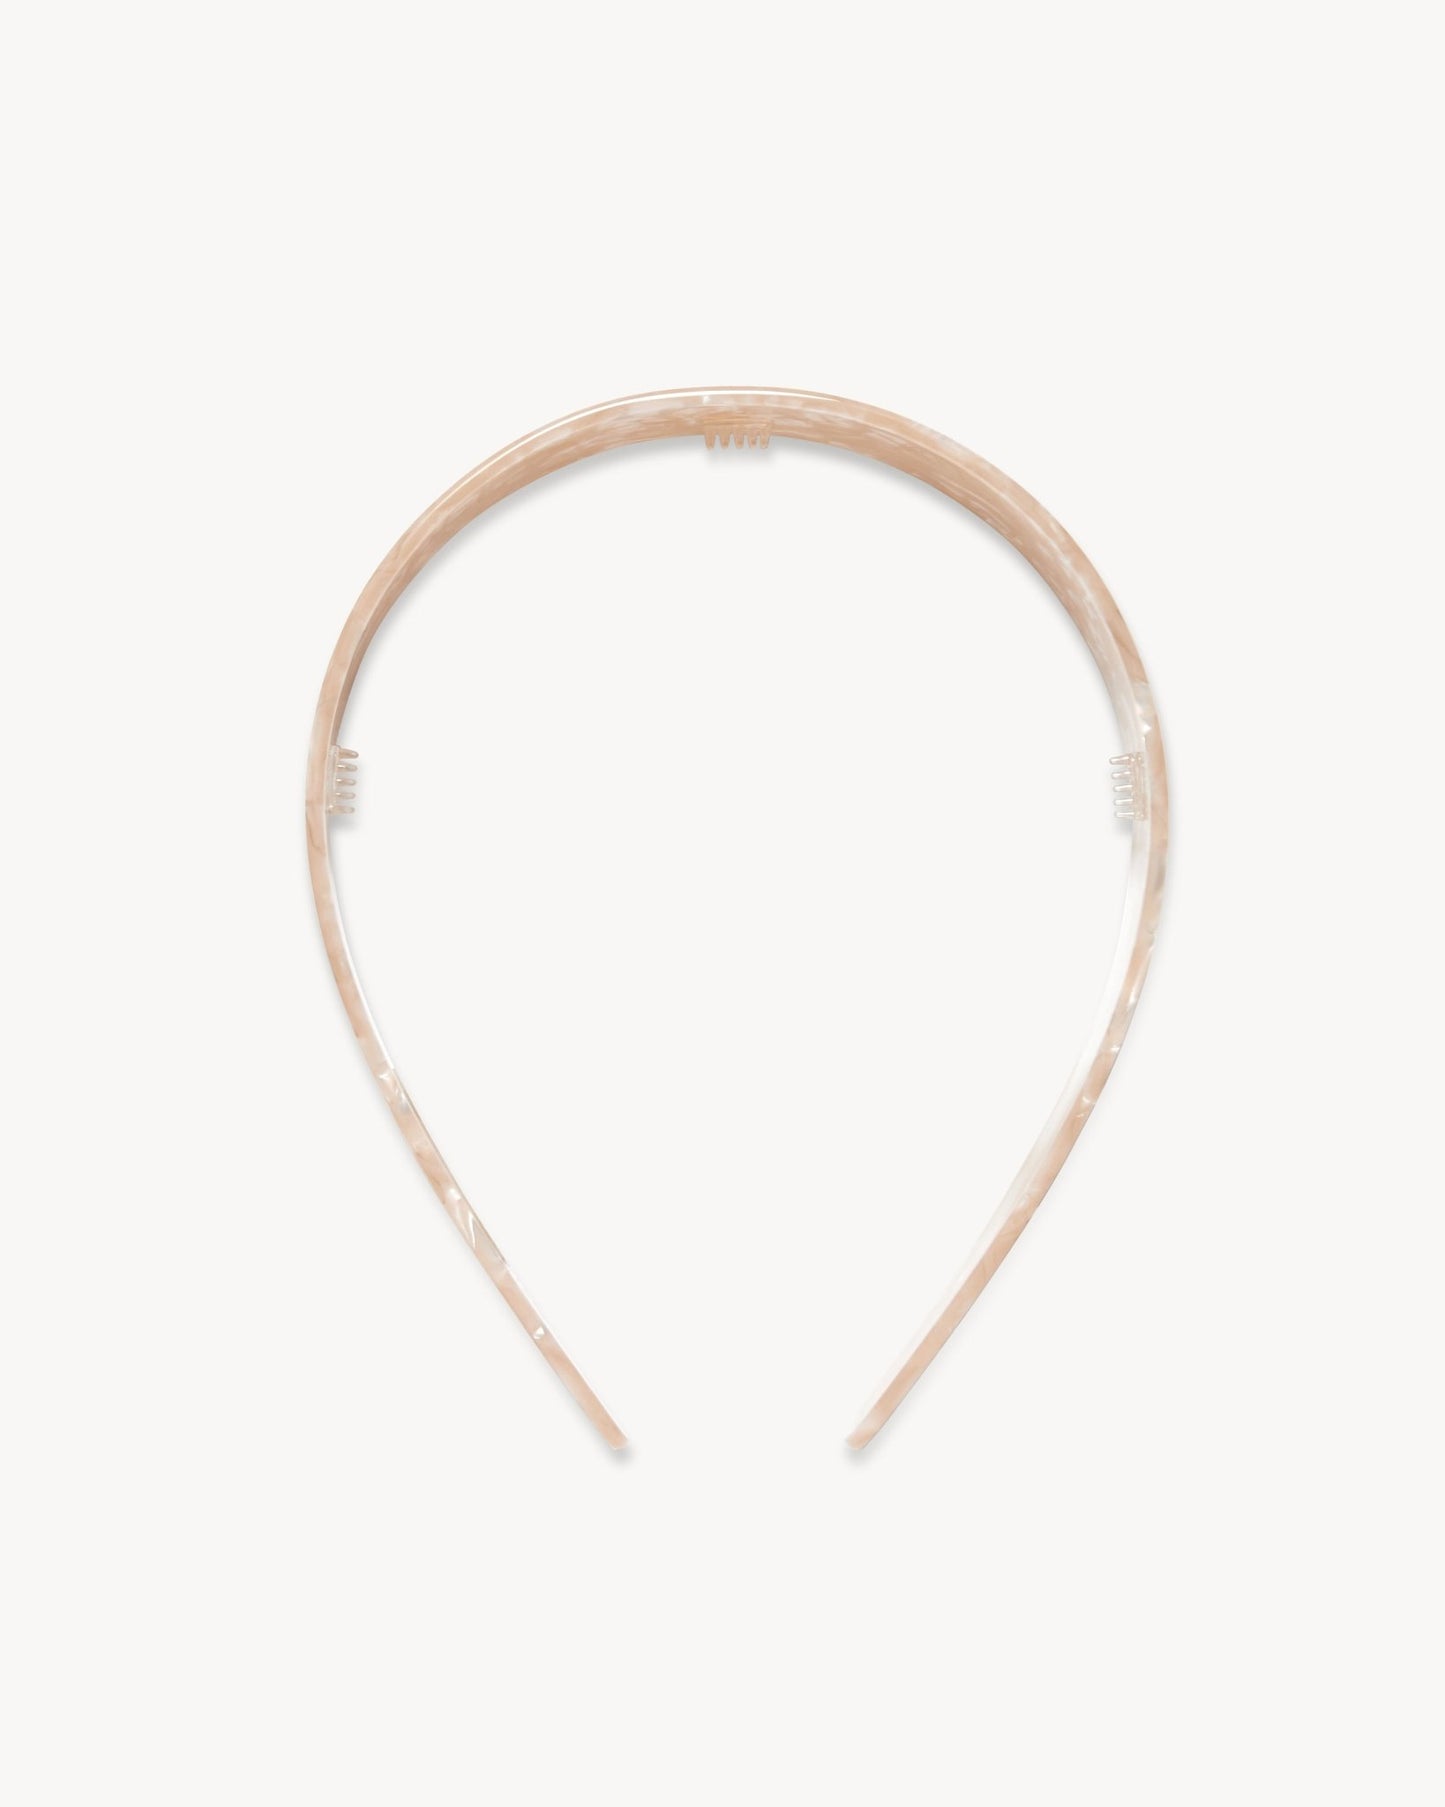 Wide Headband in Peach Shell - MACHETE